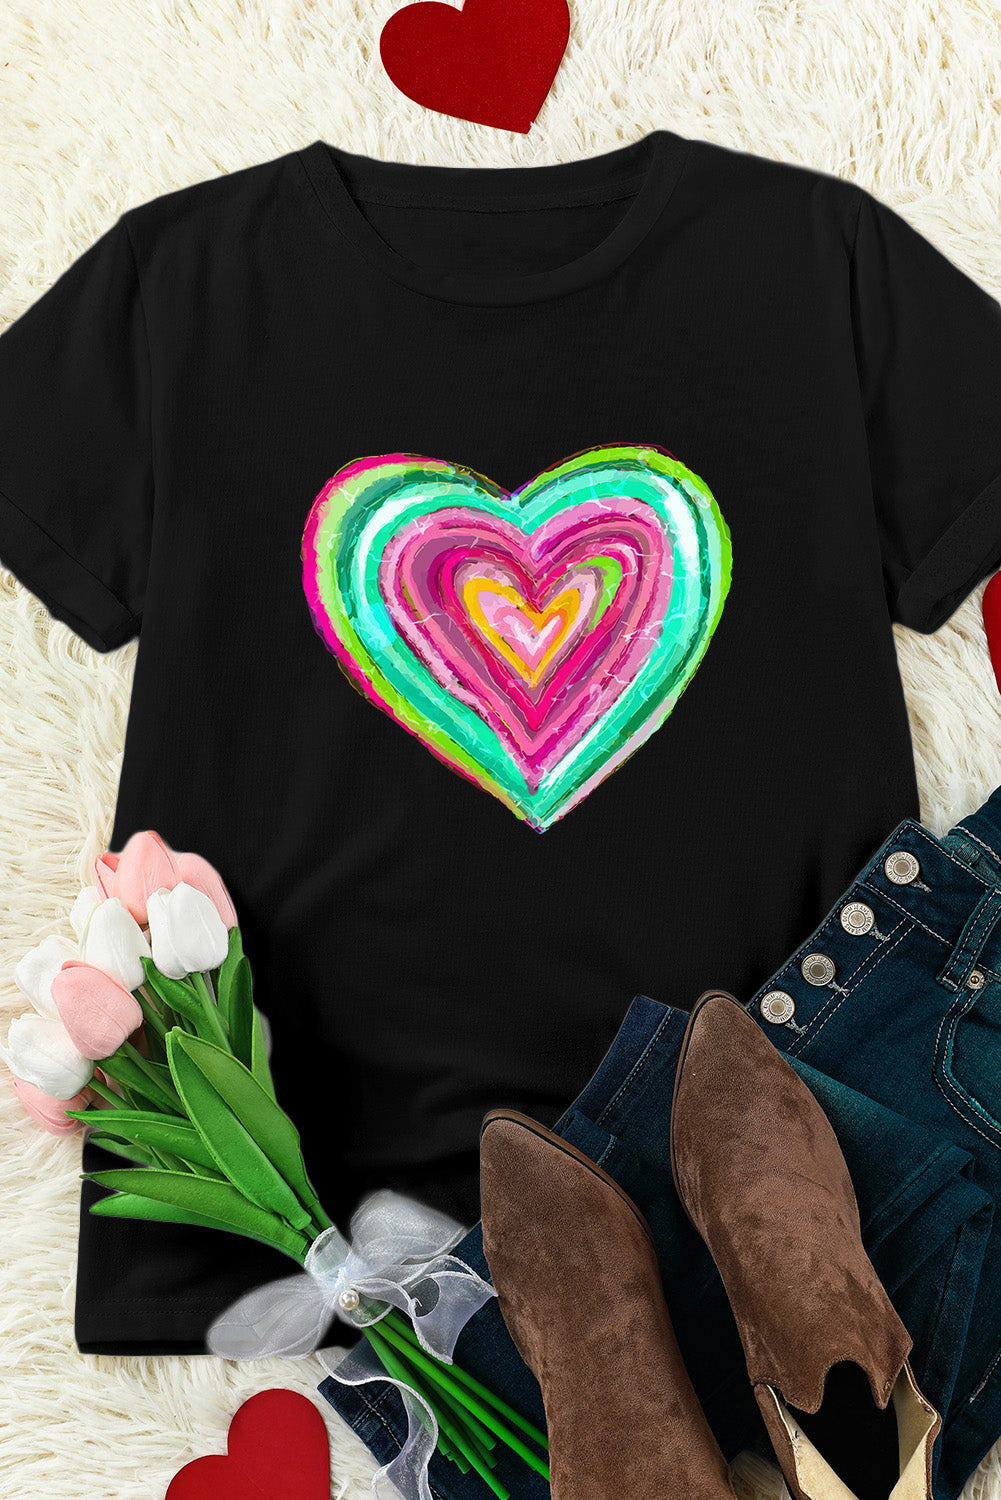 LC25224028-2-S, LC25224028-2-M, LC25224028-2-L, LC25224028-2-XL, LC25224028-2-2XL, Black Valentines Day Shirts Heart Shaped Print Crew Neck T Shirt